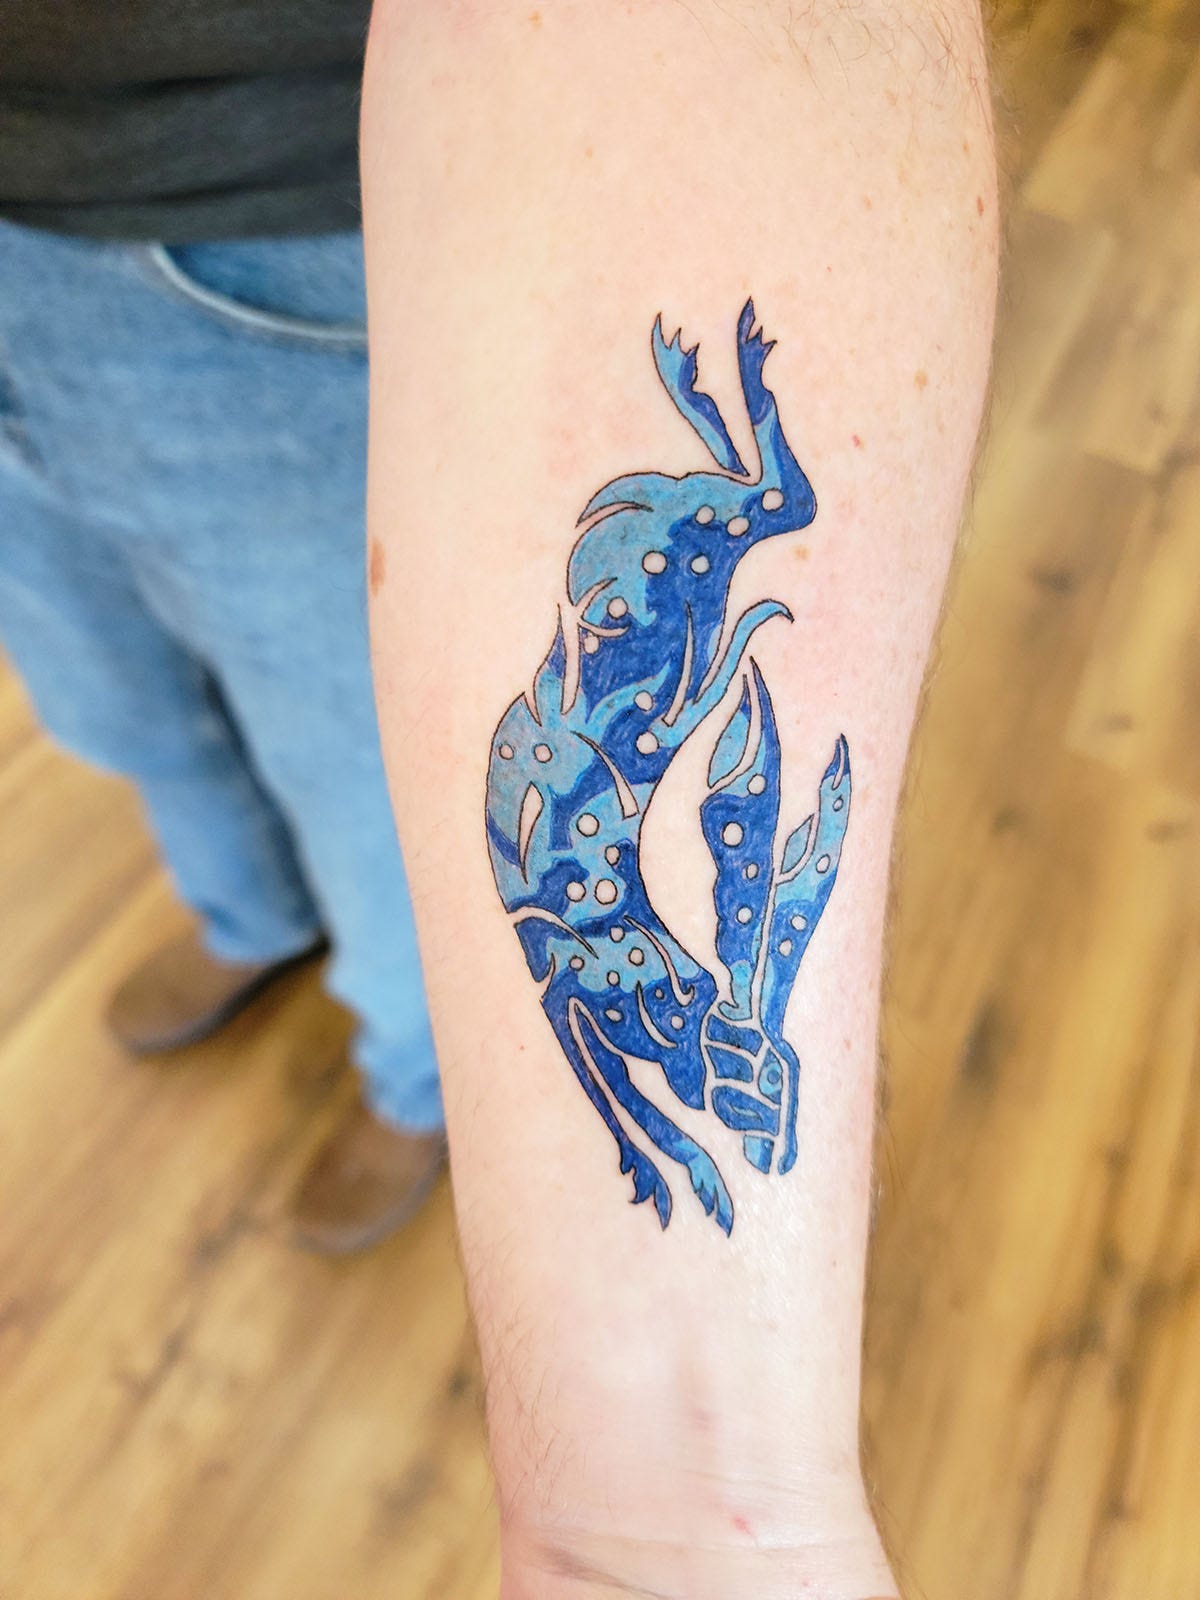 Hank Shaw's jackrabbit tattoo.